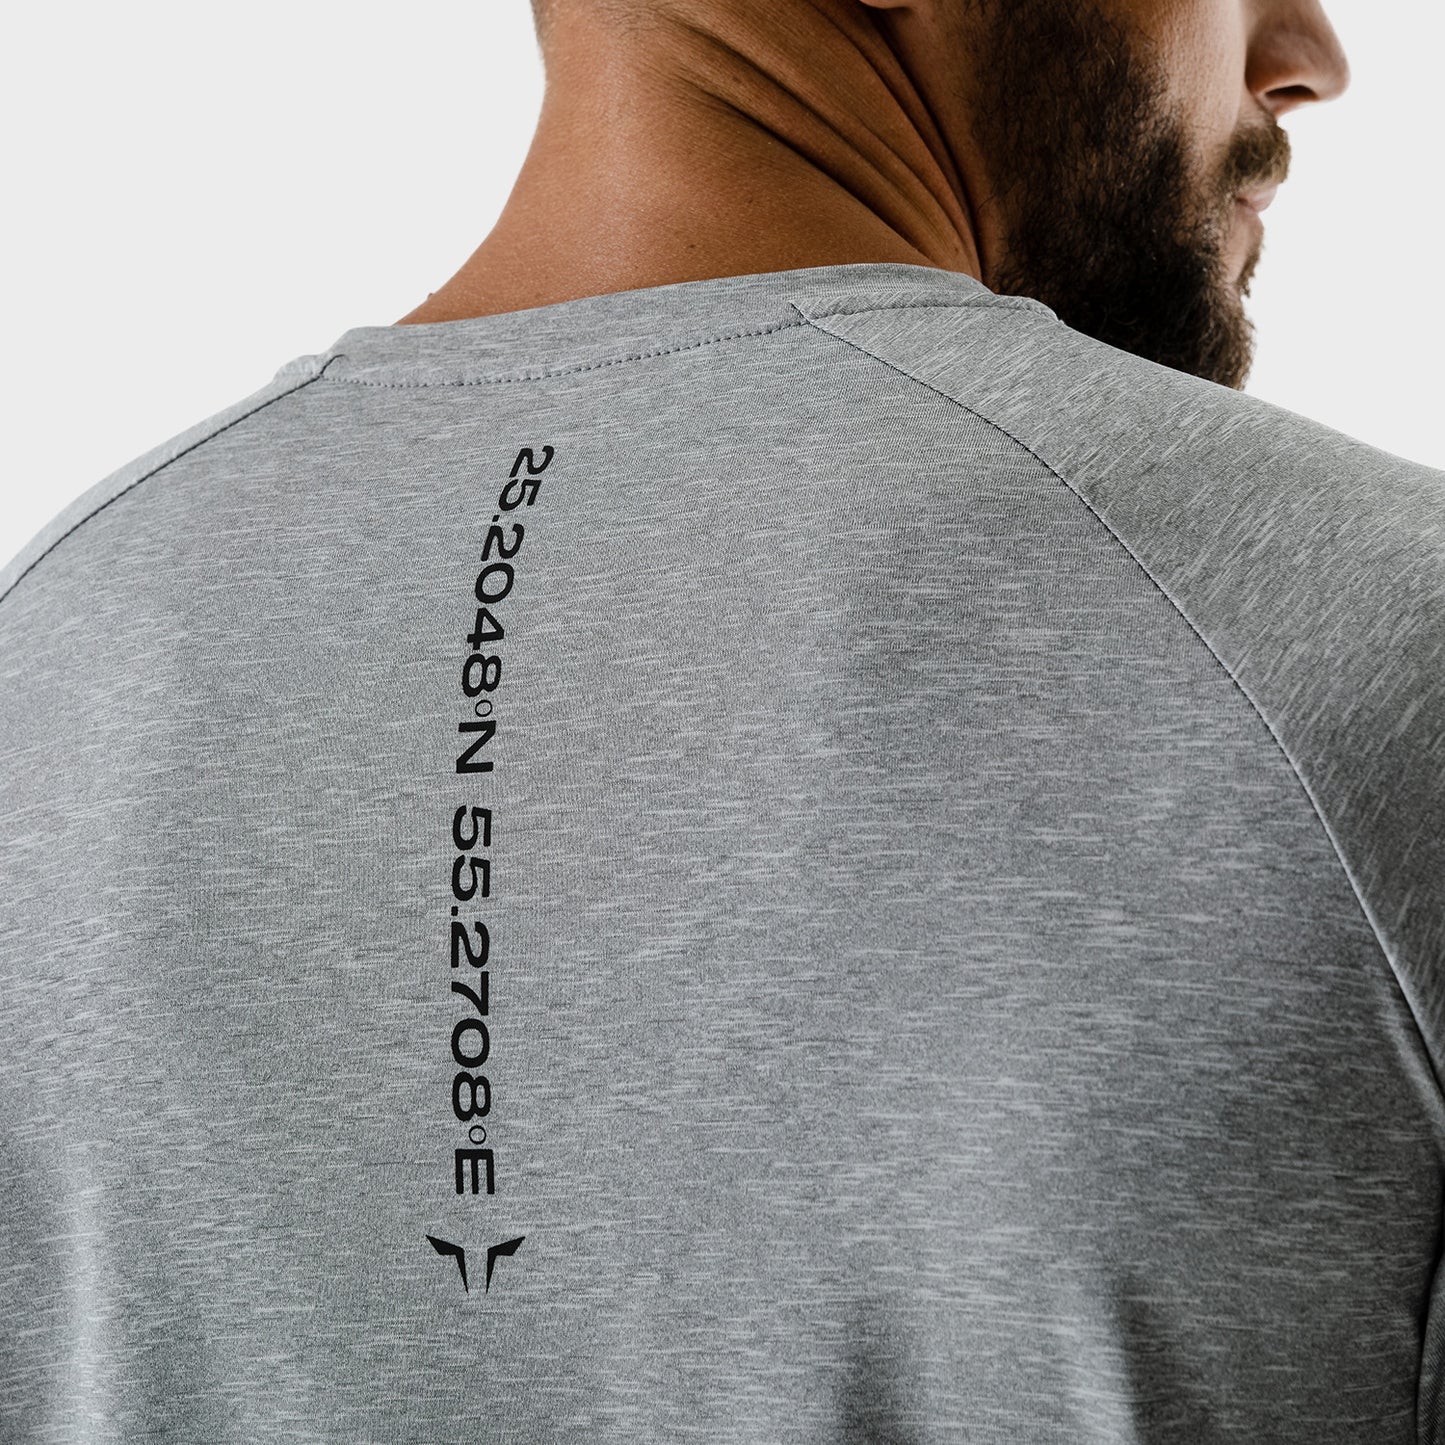 squatwolf-gym-t-shirt-code-logo-t-shirt-grey-marl-workout-clothes-for-men